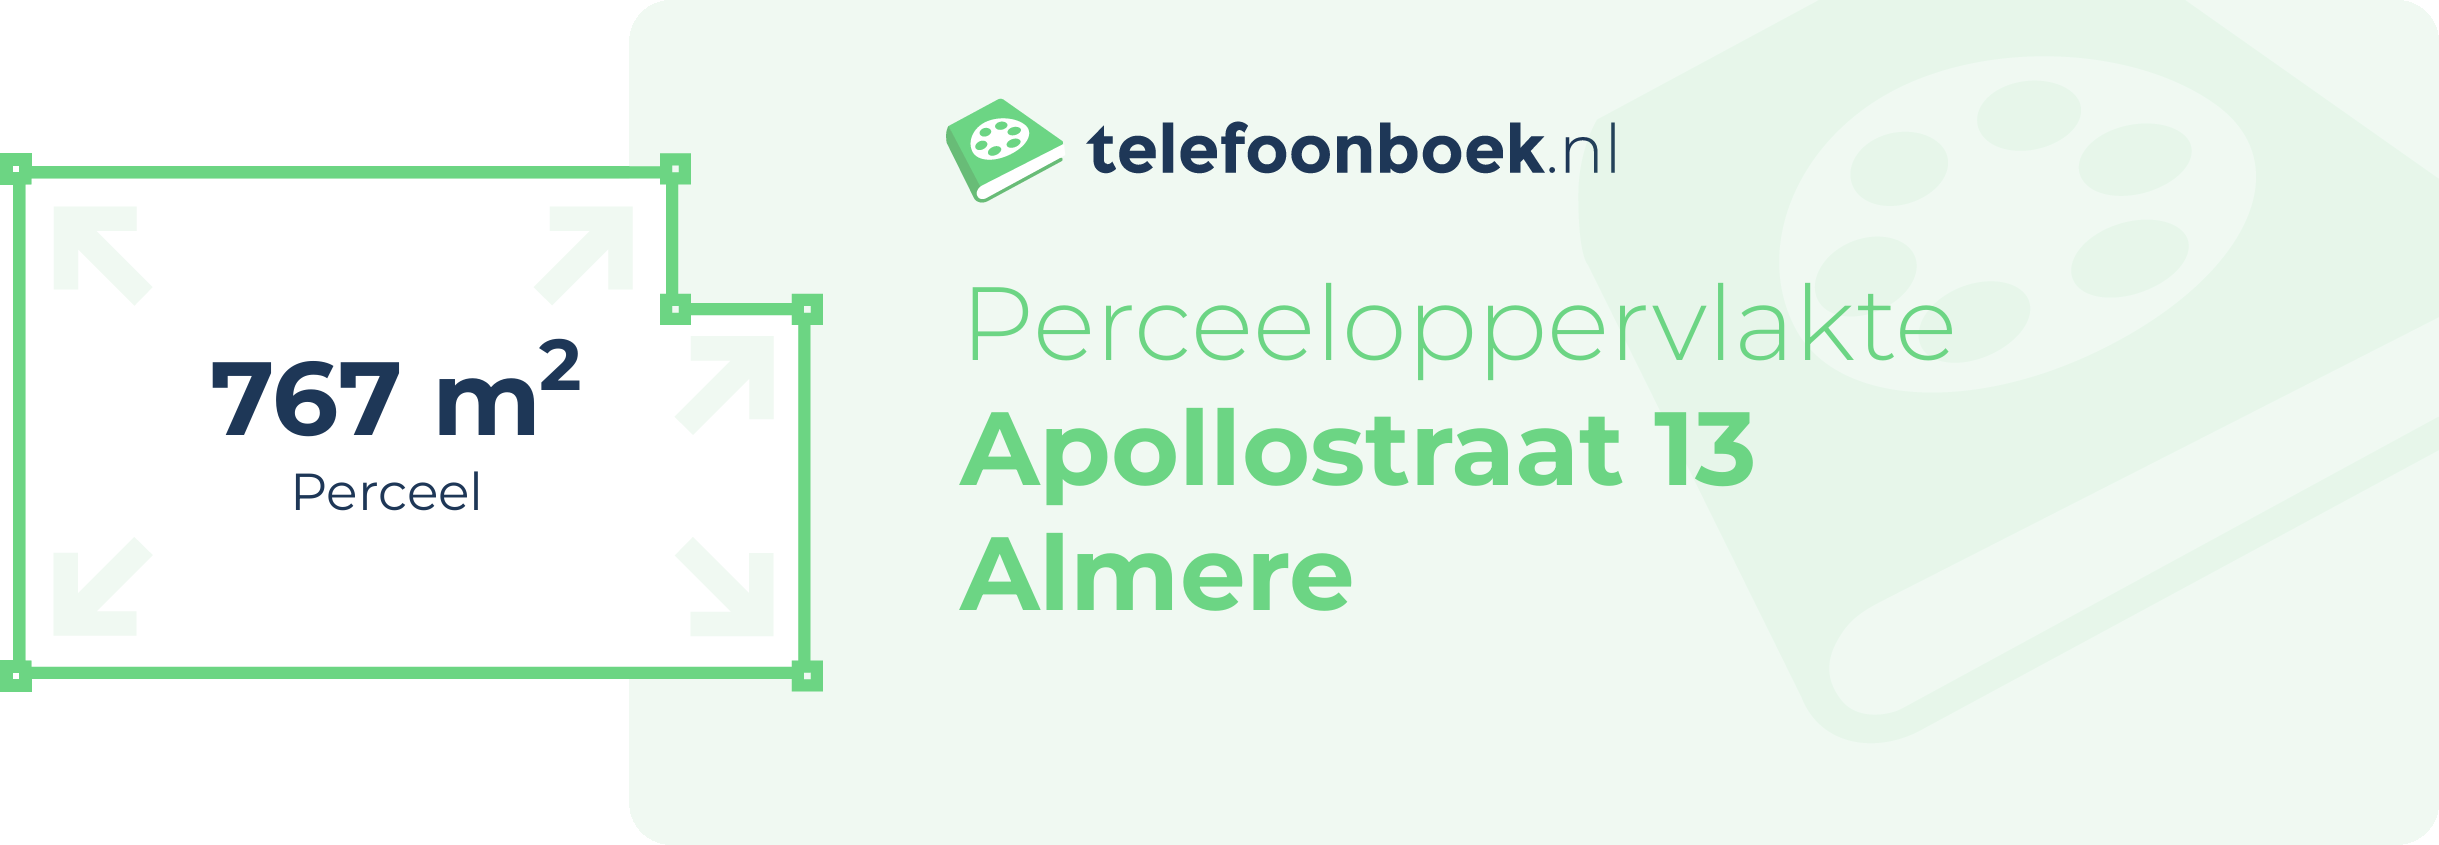 Perceeloppervlakte Apollostraat 13 Almere